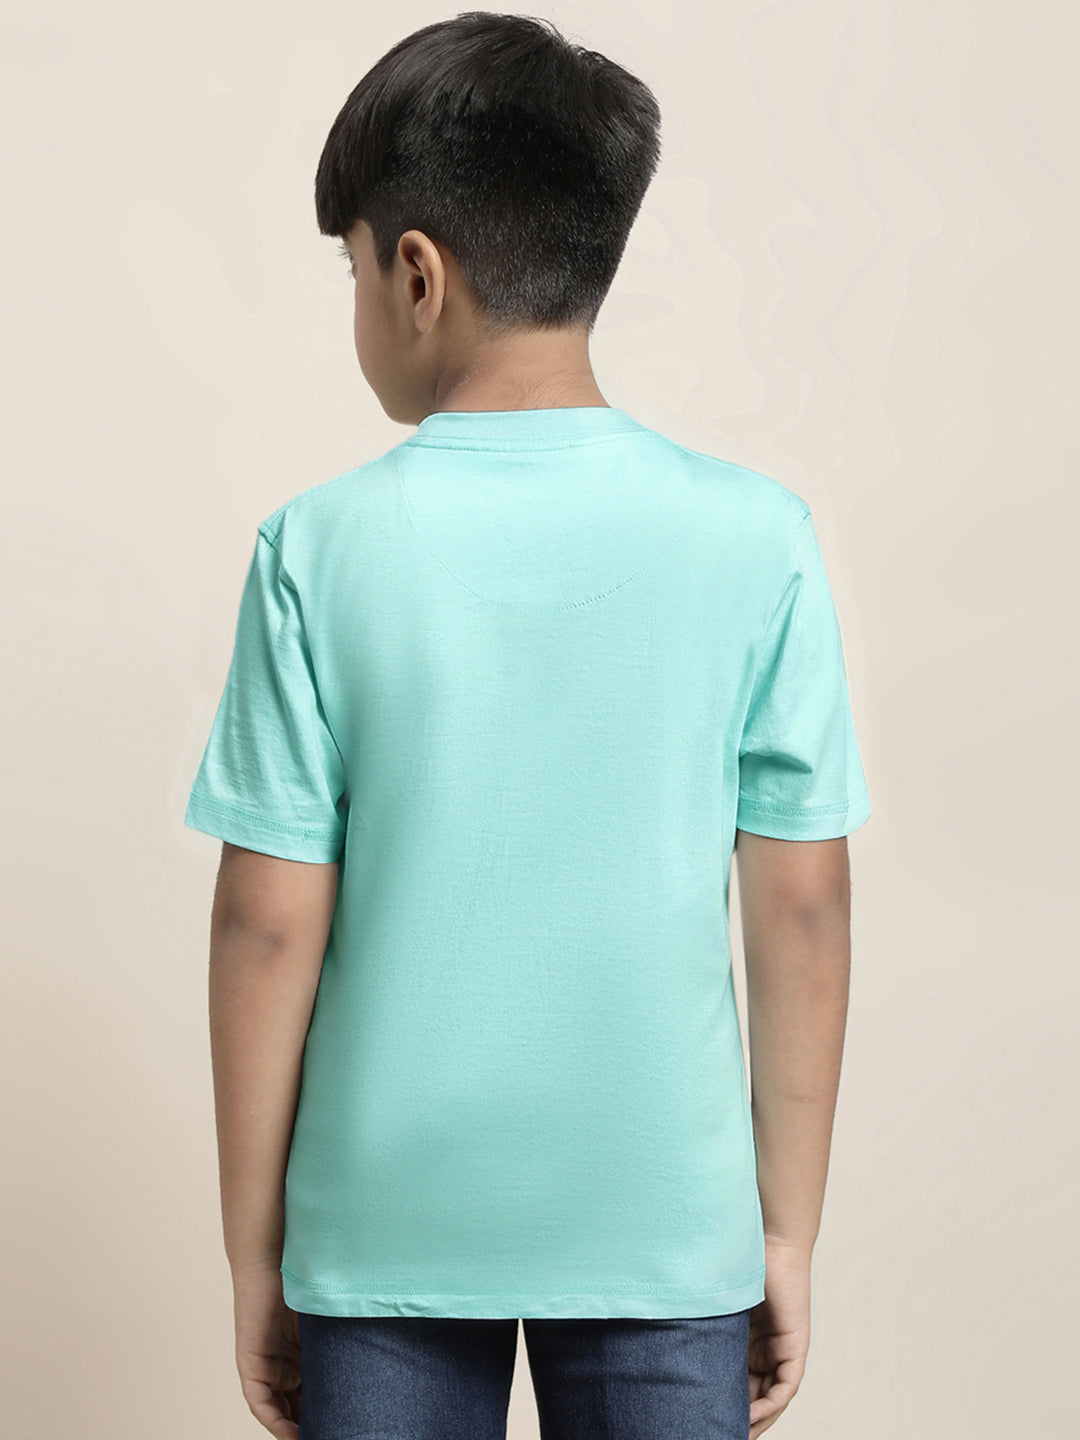 Kidsville Peanuts Printed Blue Tshirt For Boys